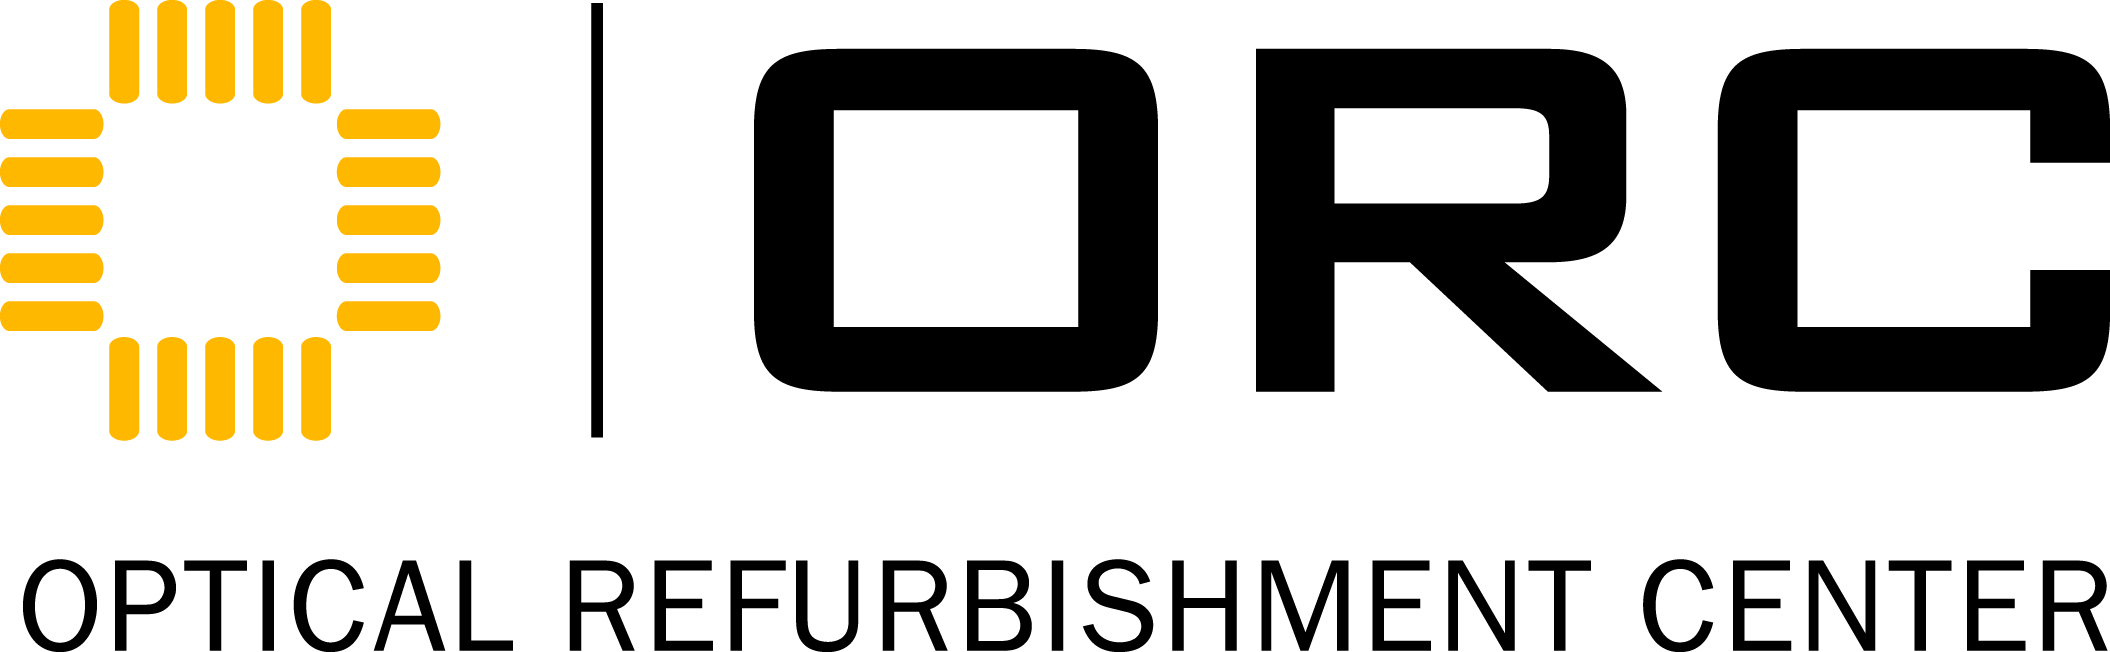 Logo Optical Refurbishment Center GmbH